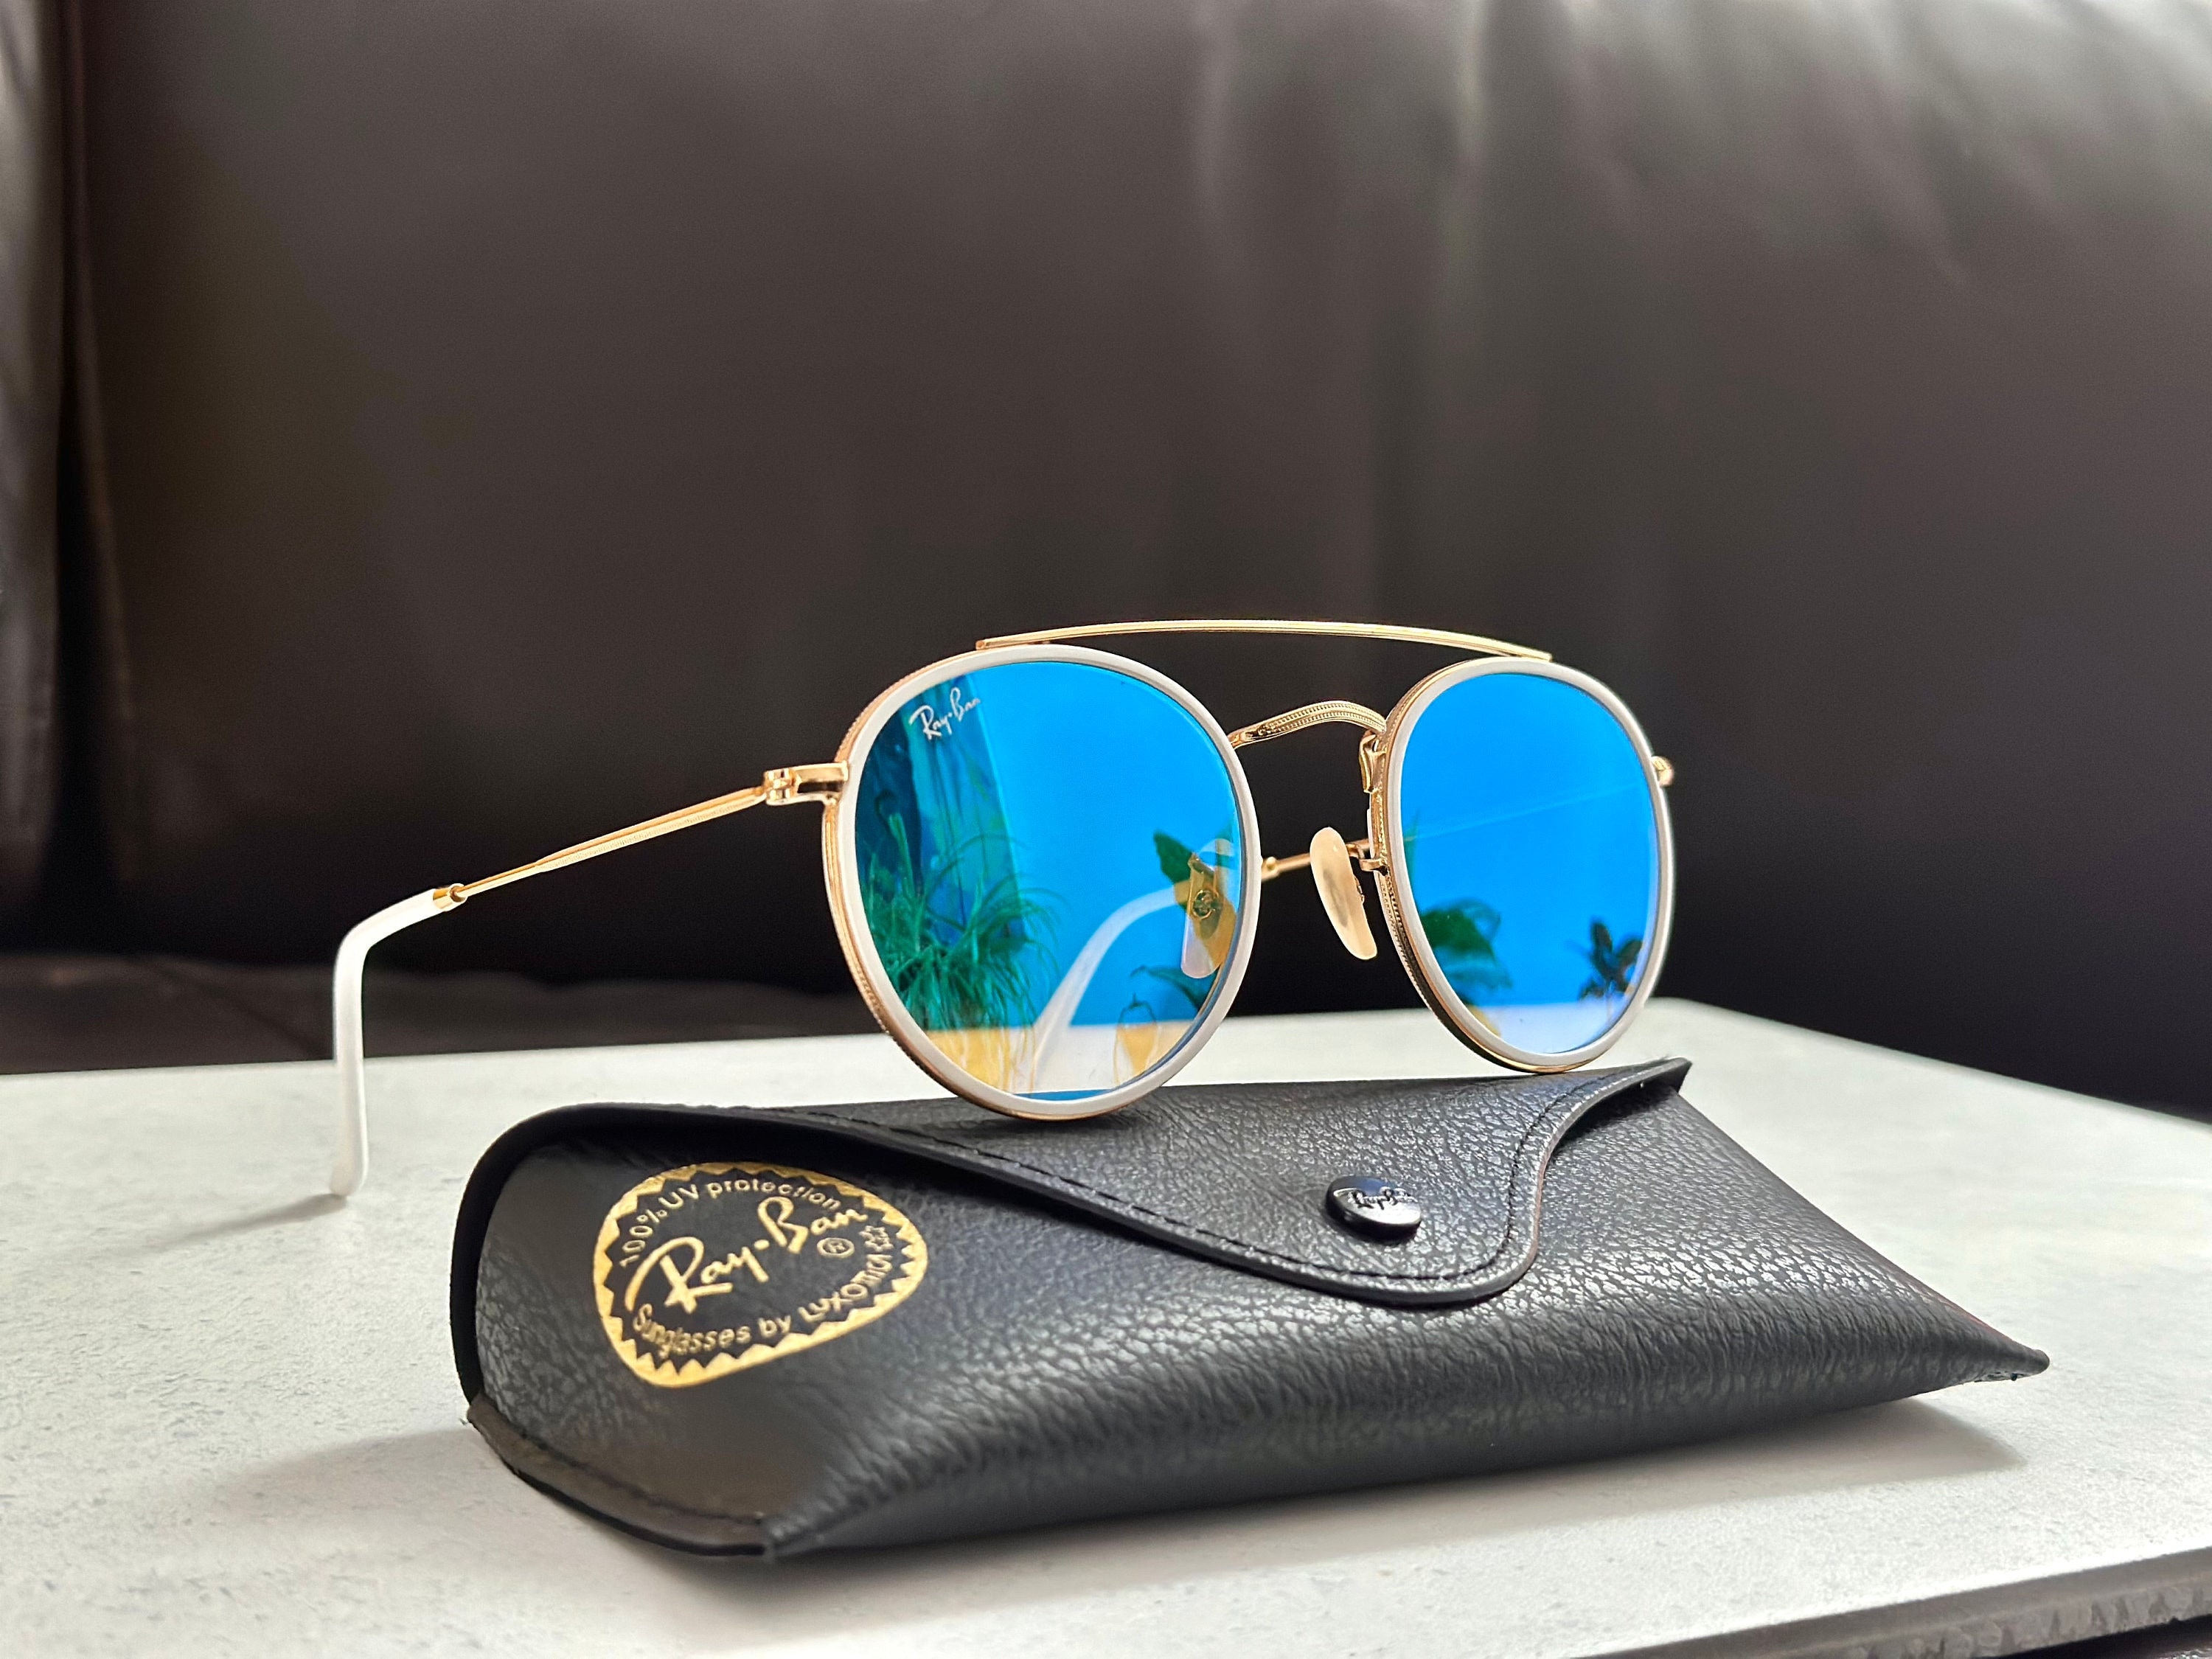 Ray-Ban Round Double-Bridge RB3647 Glass Sunglasses - Gold/Silver Gradient Flash Mirror - Standard